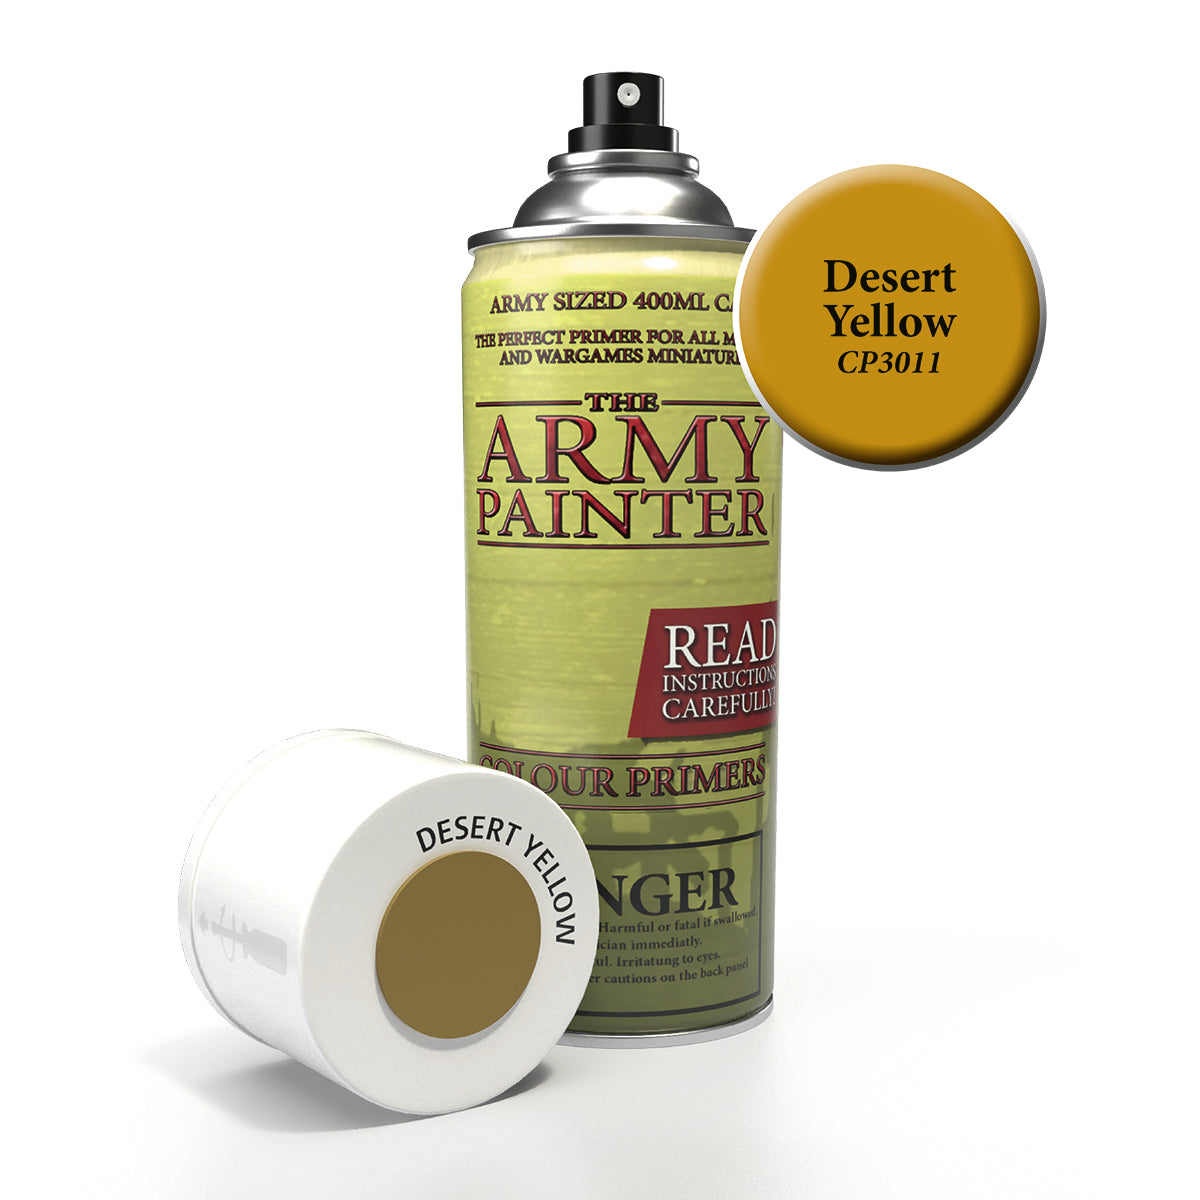 The Army Painter Spray